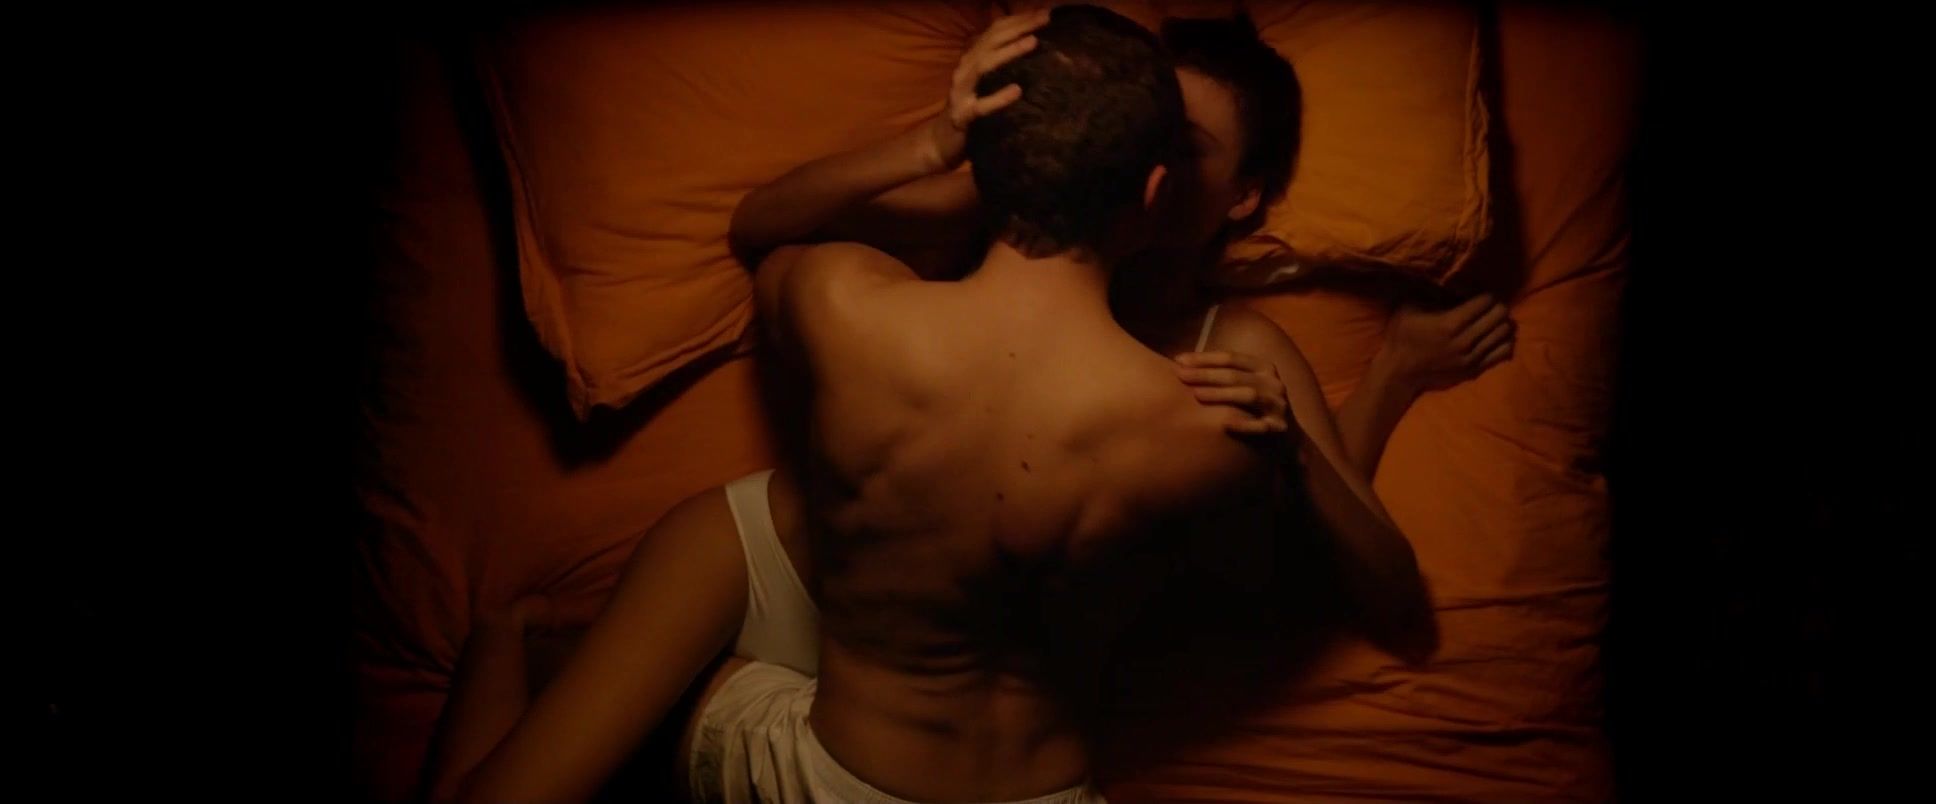 AdultFriendFinder Best Mainstream Adult Film | Explicit Uncensored Sex Scenes of the movie "Love" 4porn - 1